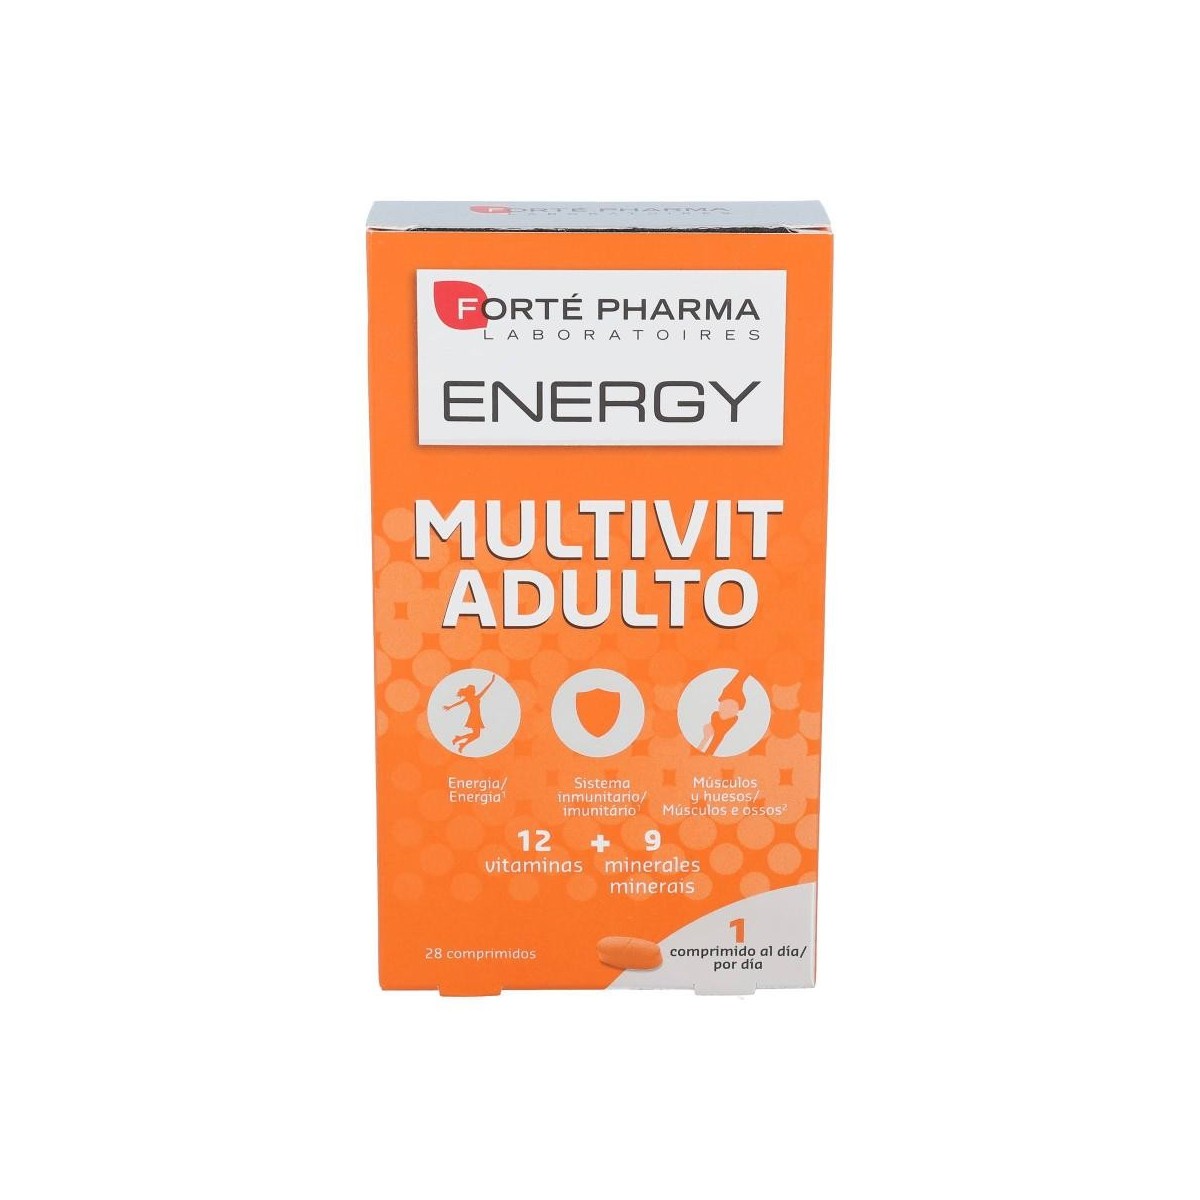 energy multivit adulto forte pharma 28 comprimidos